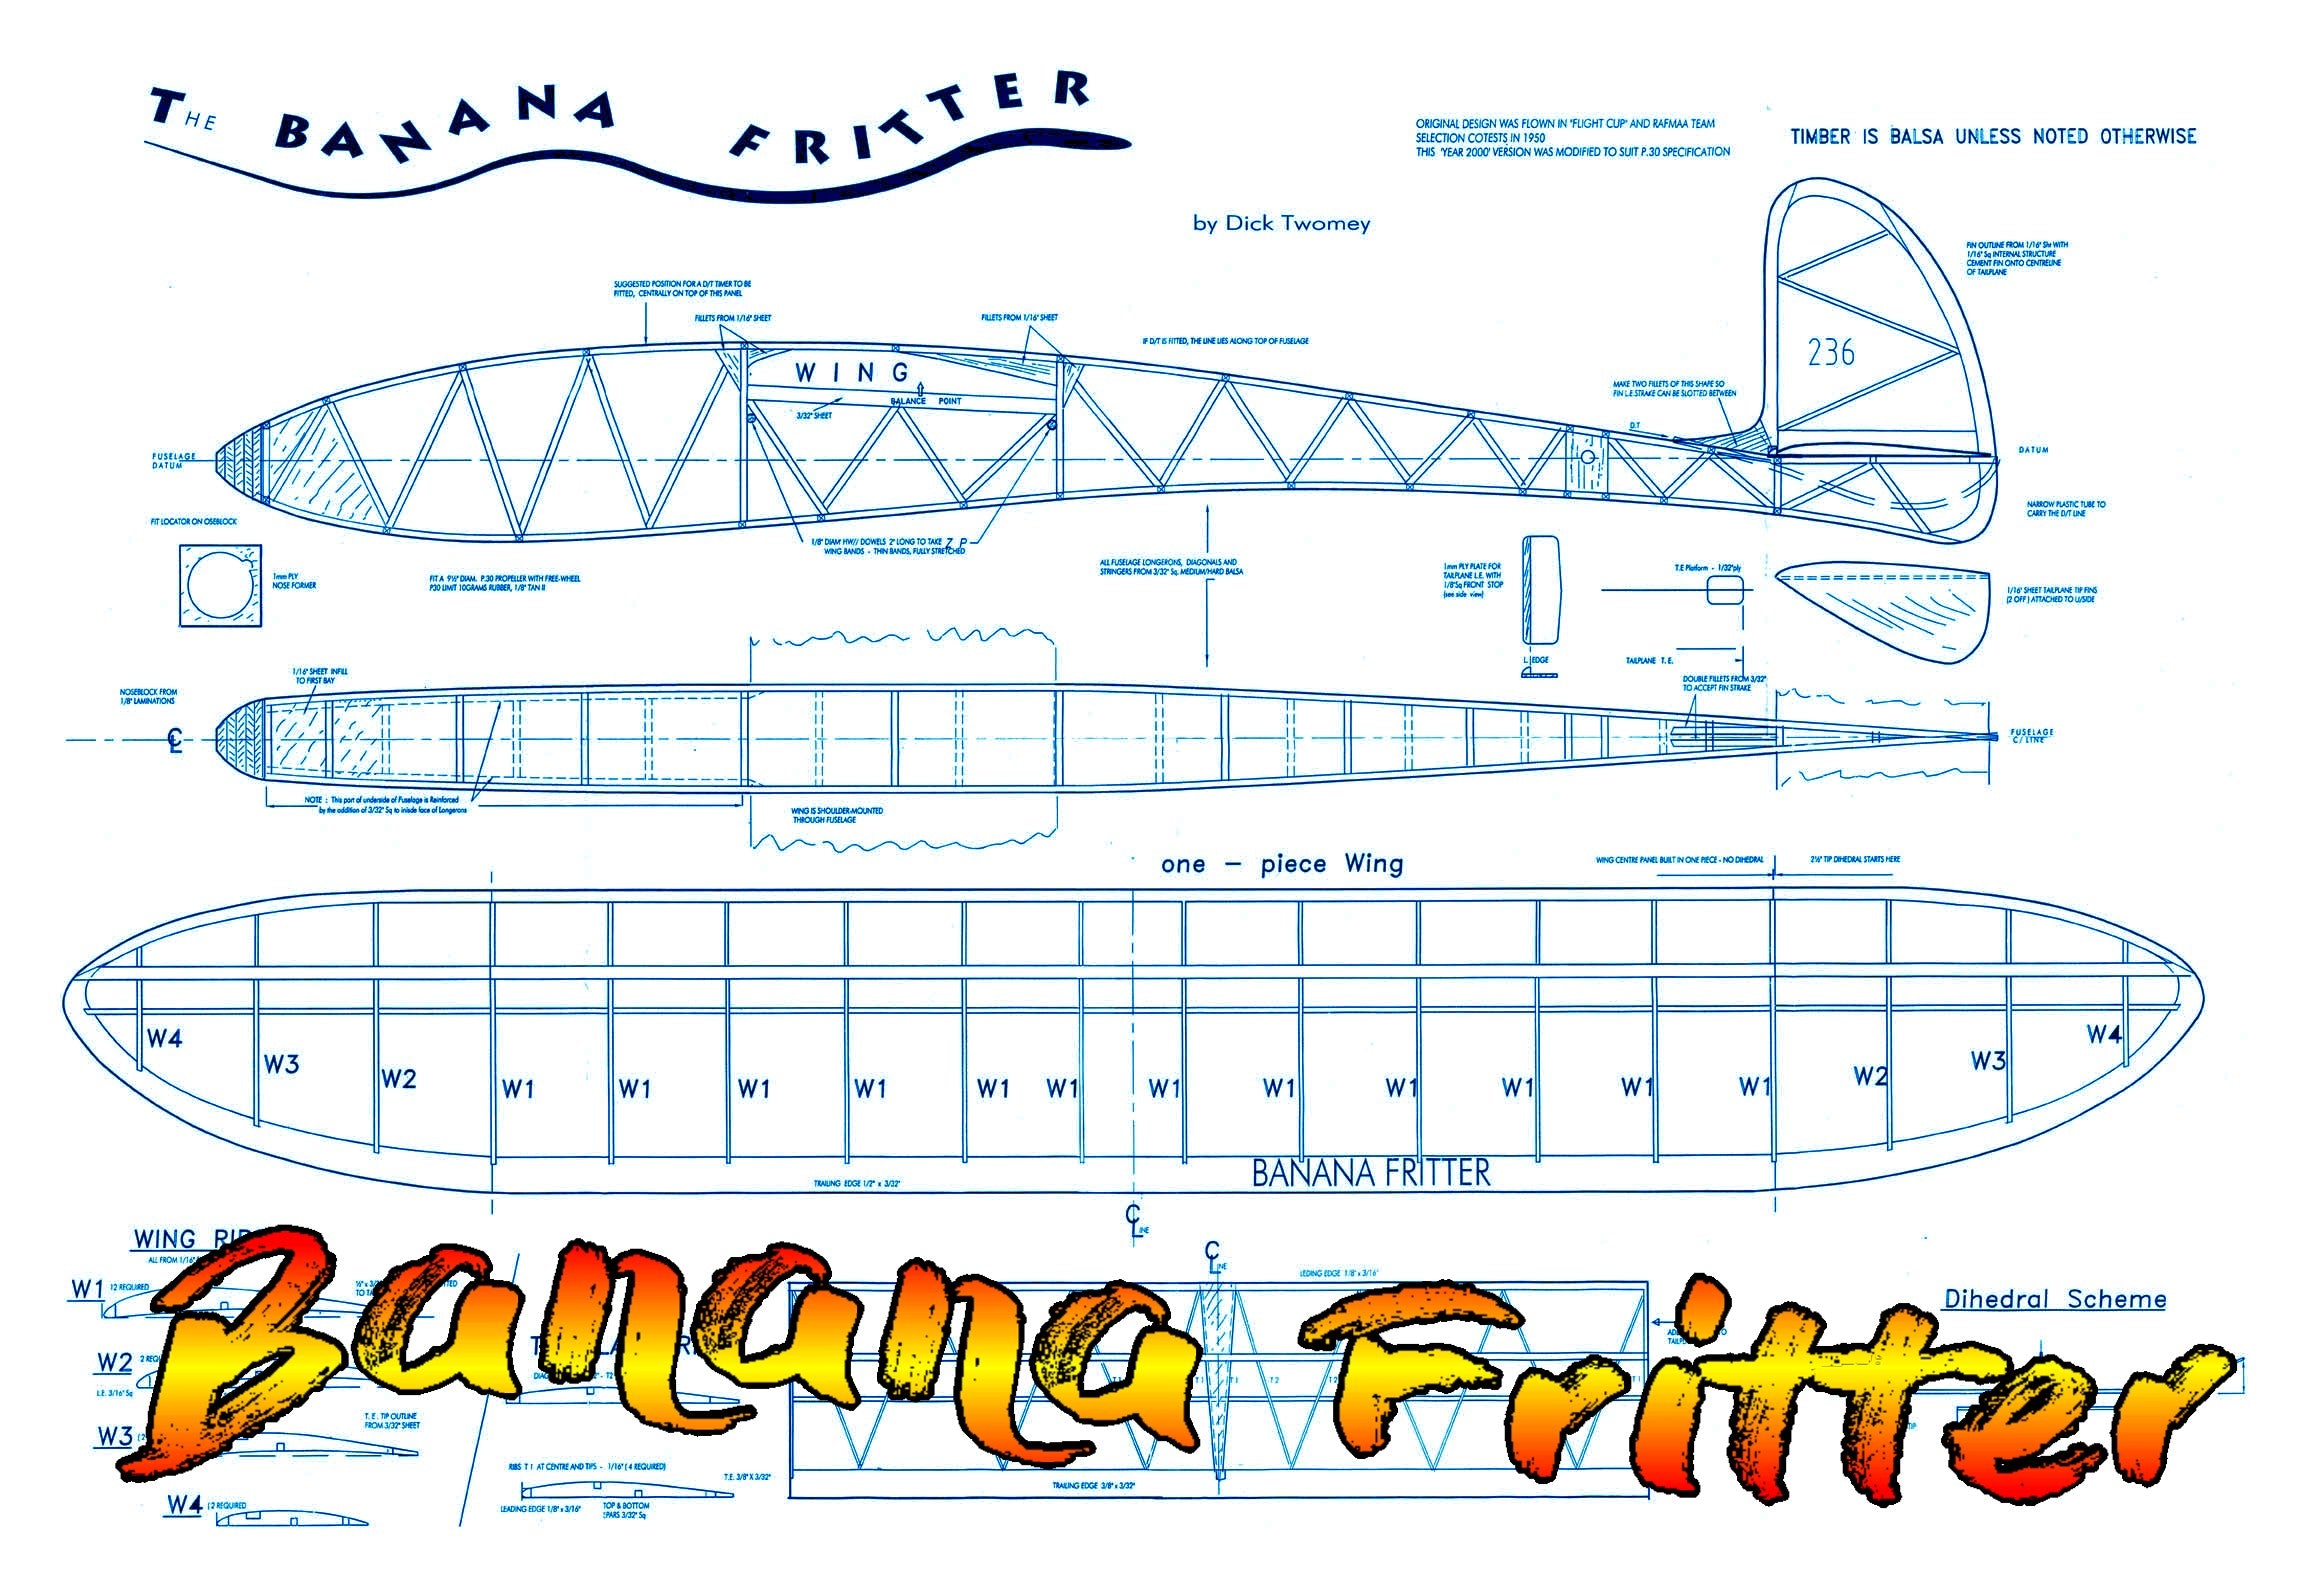 full size printed plans free flight p-30 original design from 1950 "banana fritter"